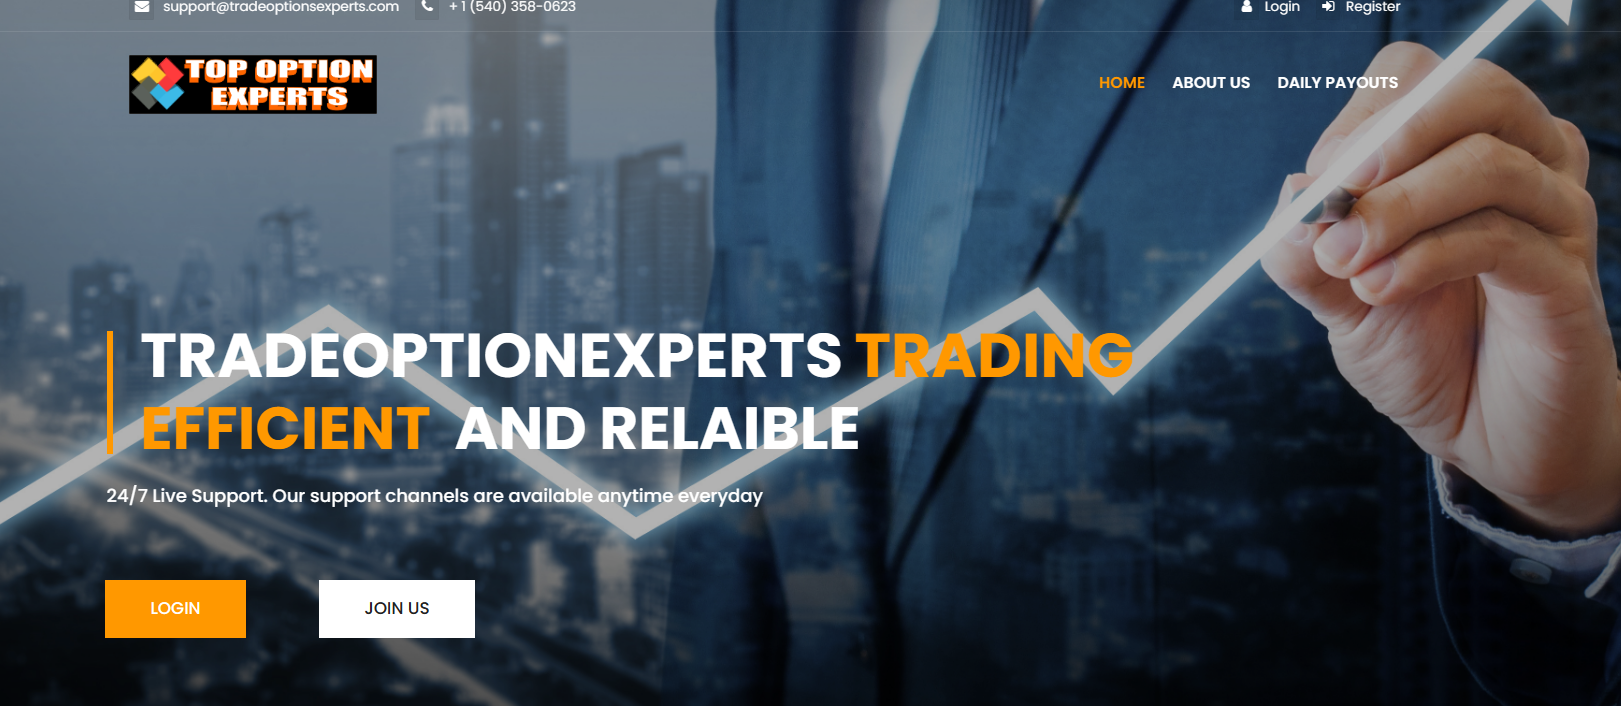 TradeOptionsExperts.com